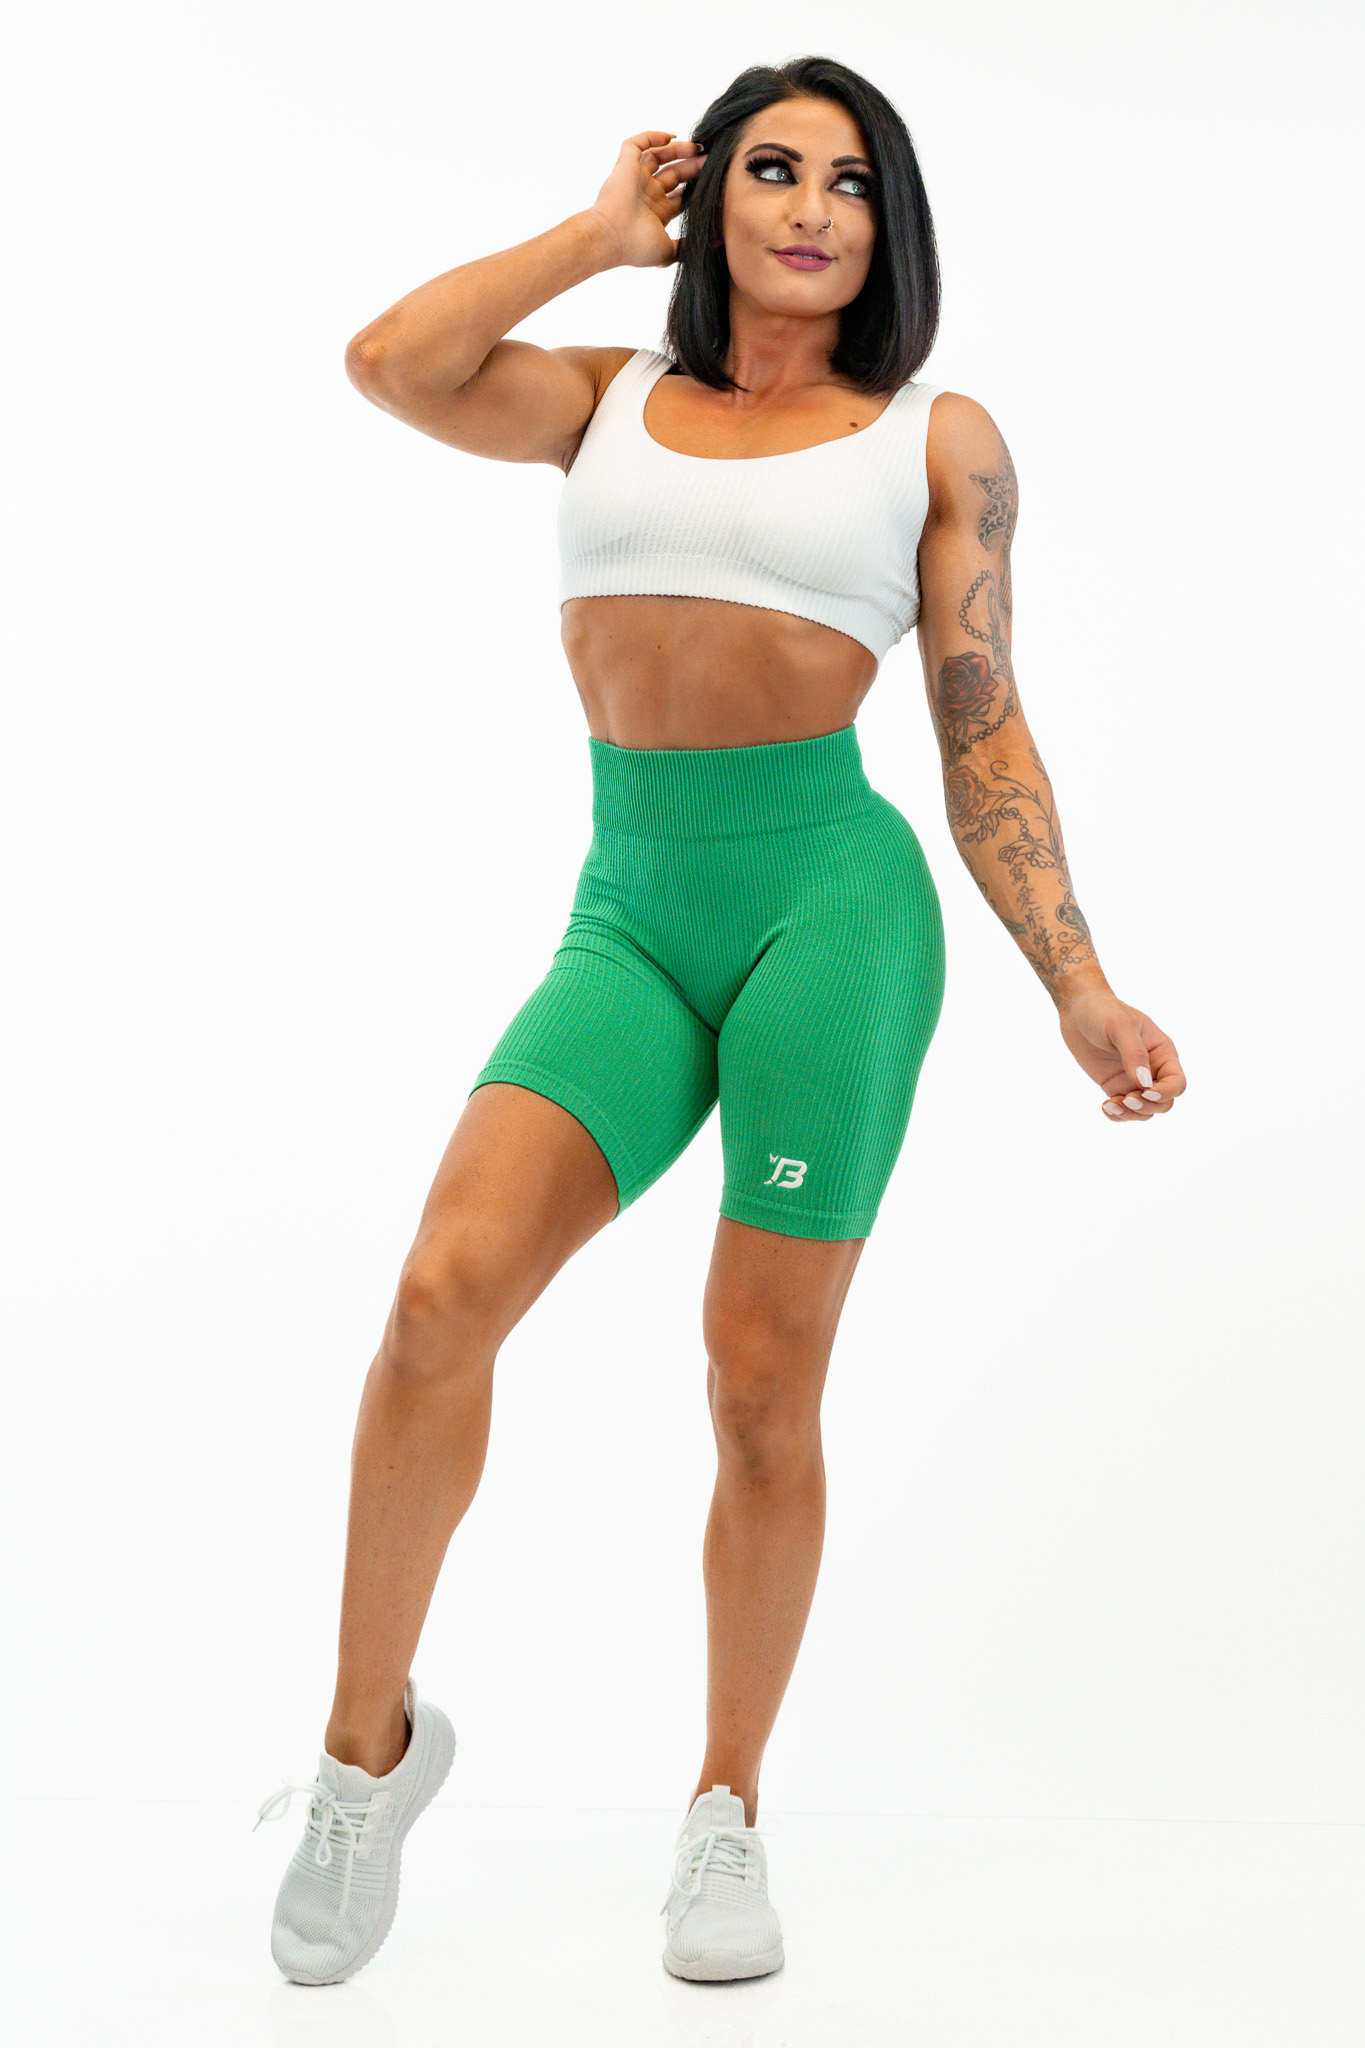 Bombshell Sportswear Spandex Athletic Tank Tops for Women